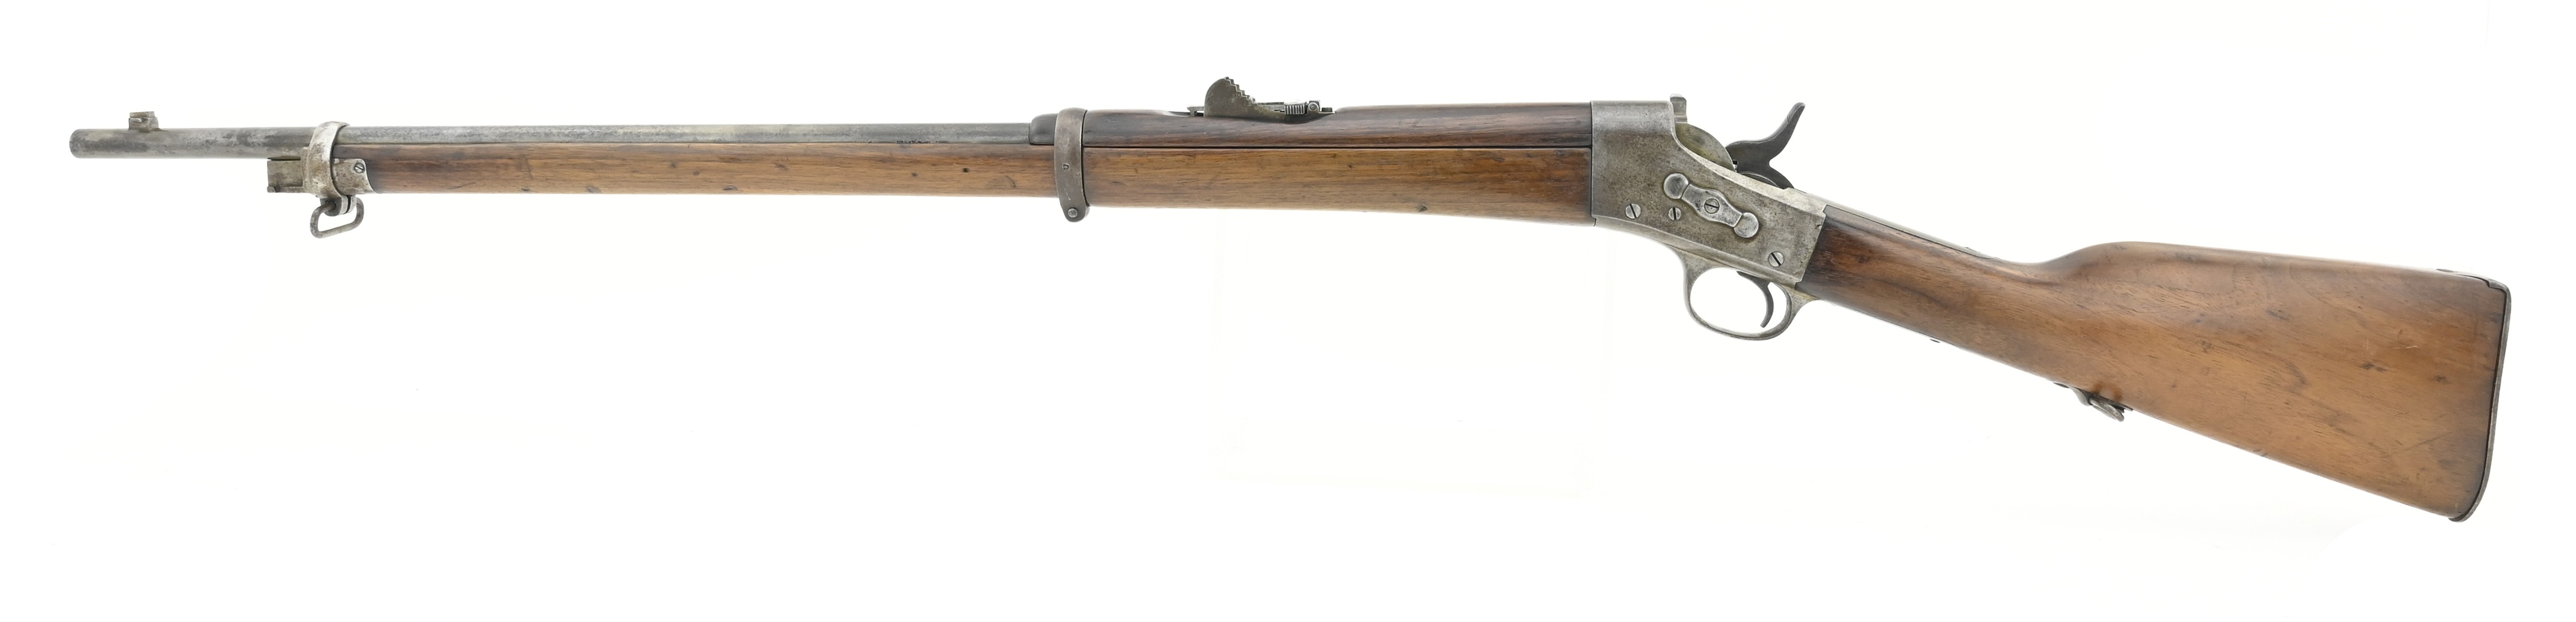 french remington rolling block rifle